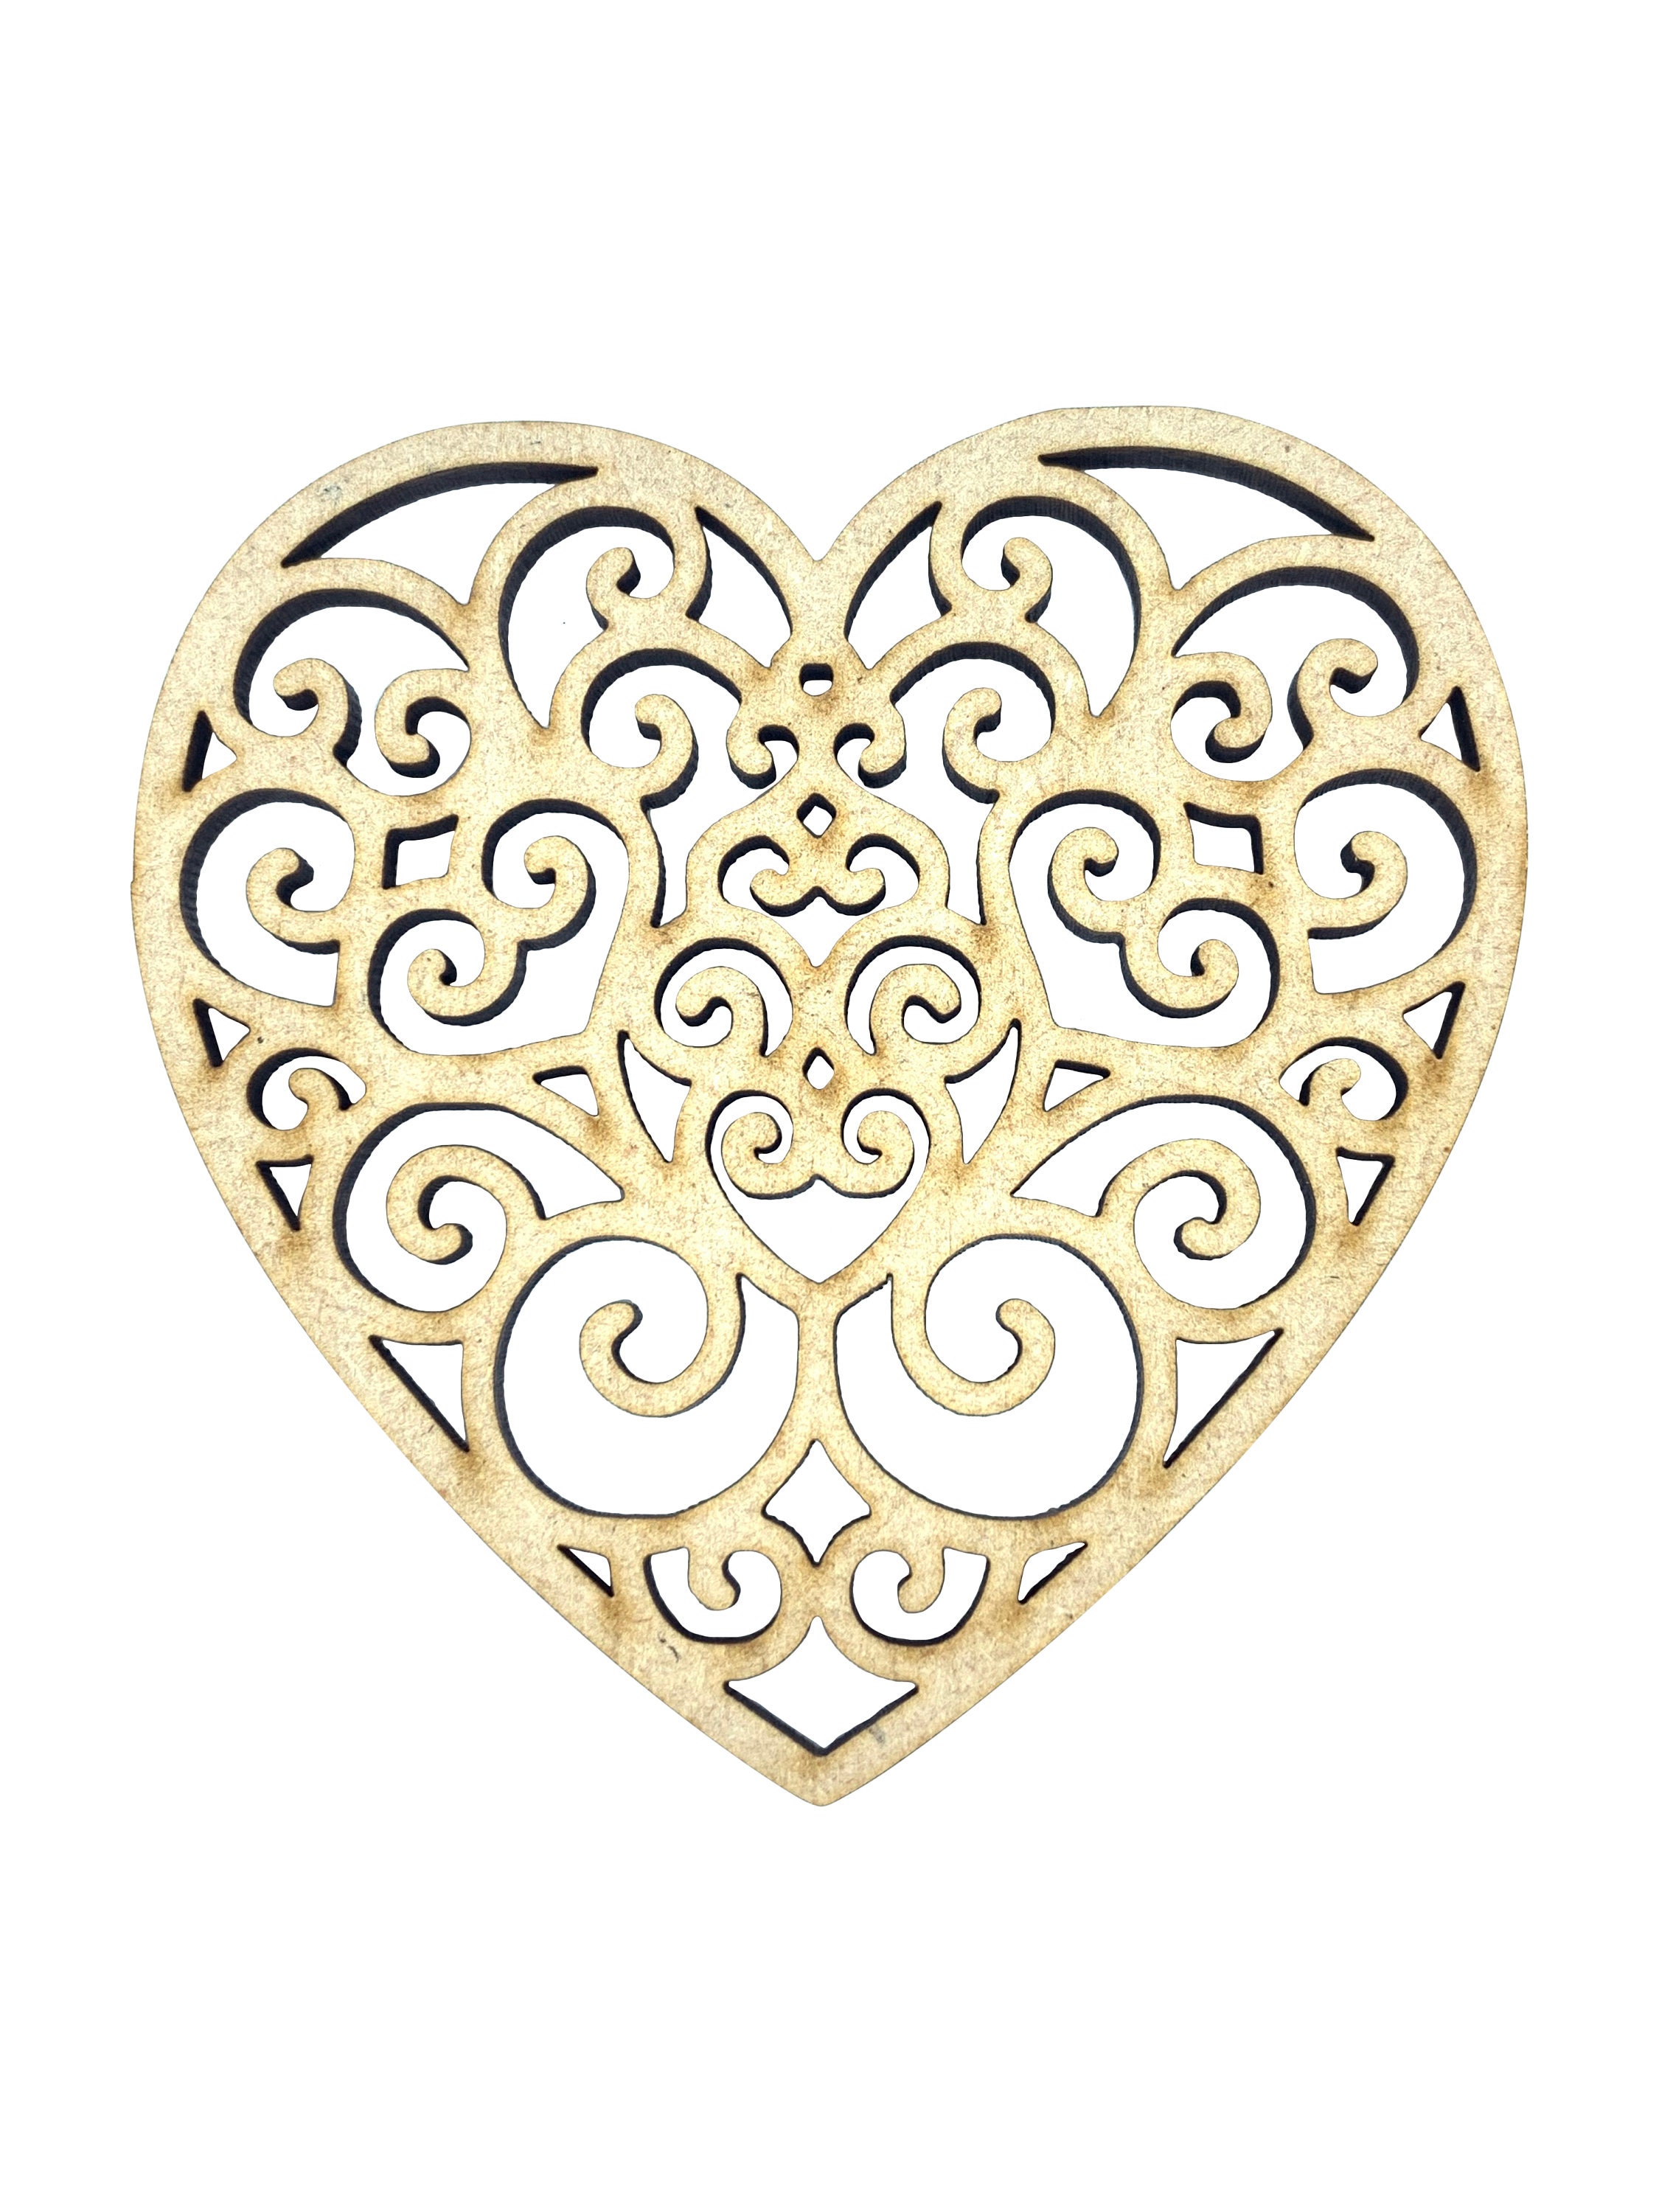 Wooden Hearts, Laser Cut Heart Decorations, Heart Confetti, Table  Decorations, Scatter Decoration, Craft Supplies 